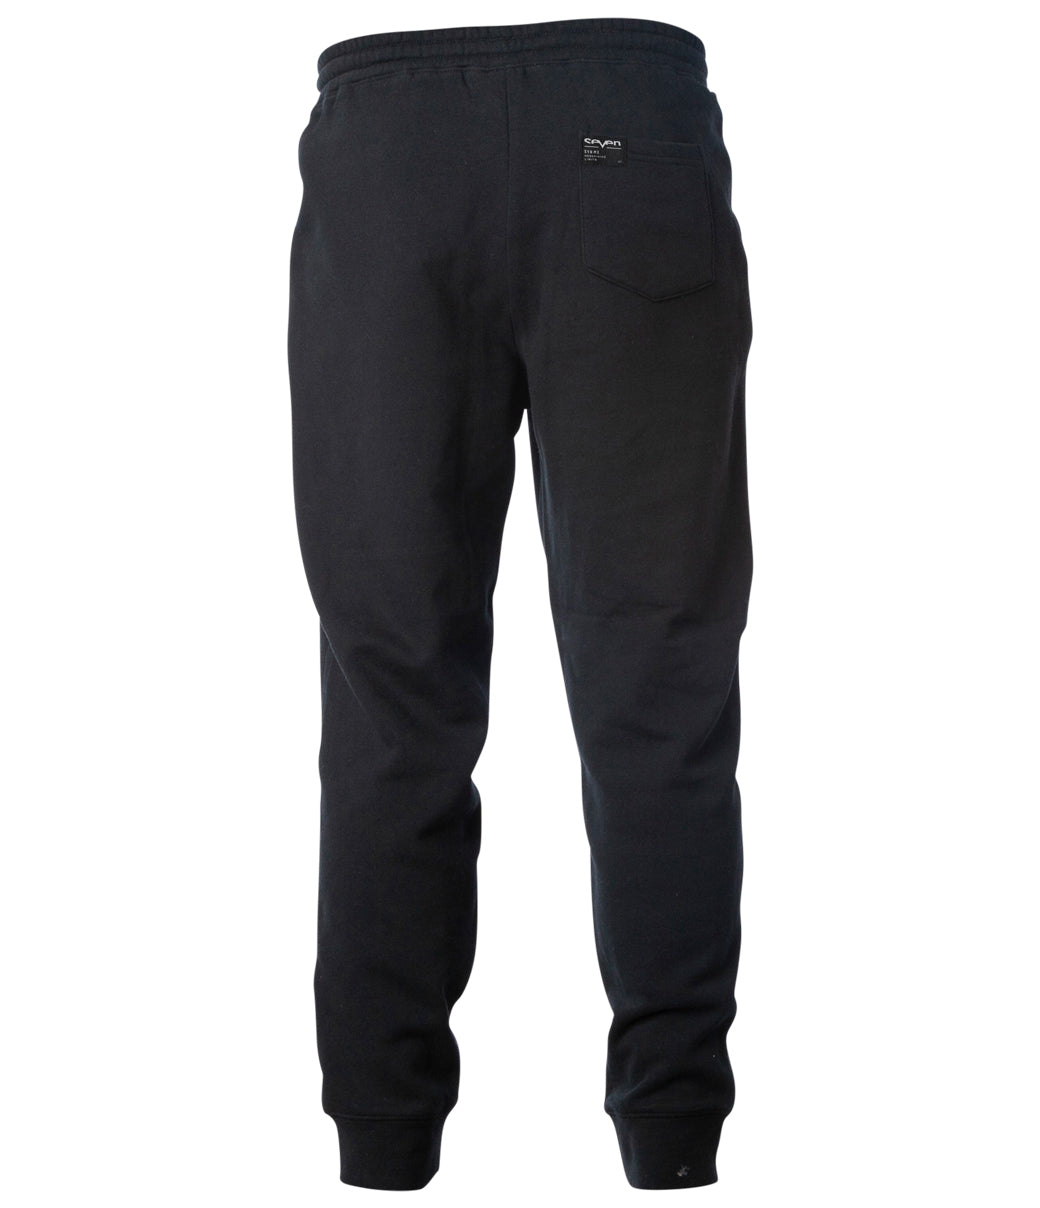 Branded Sweatpants Black